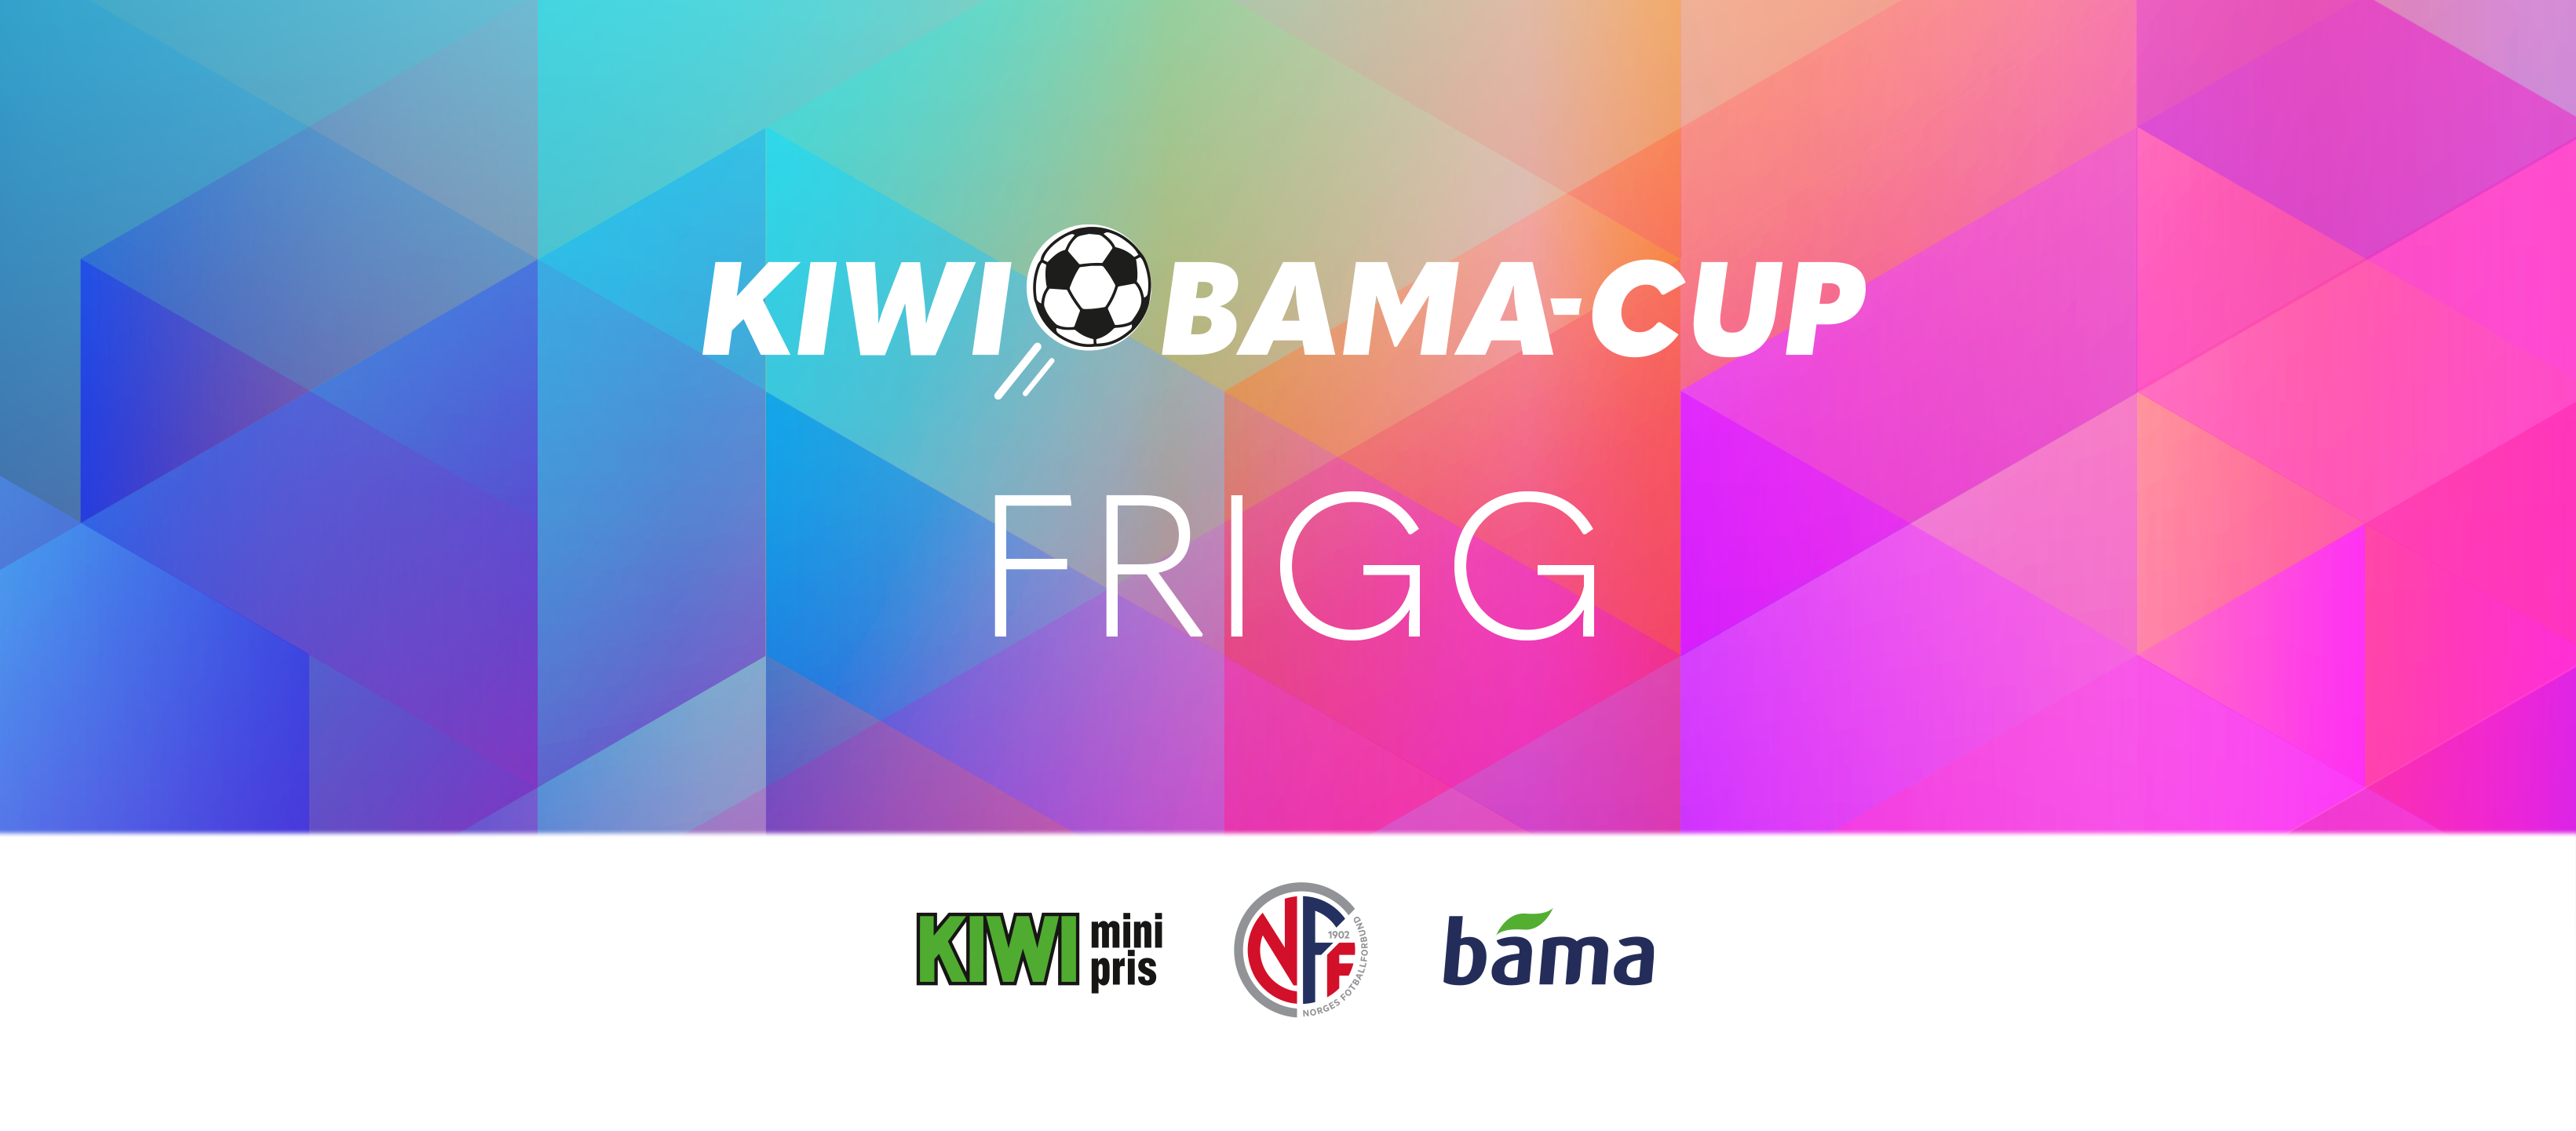 FB-BANNER KIWI-BAMA-Cup - Frigg.png